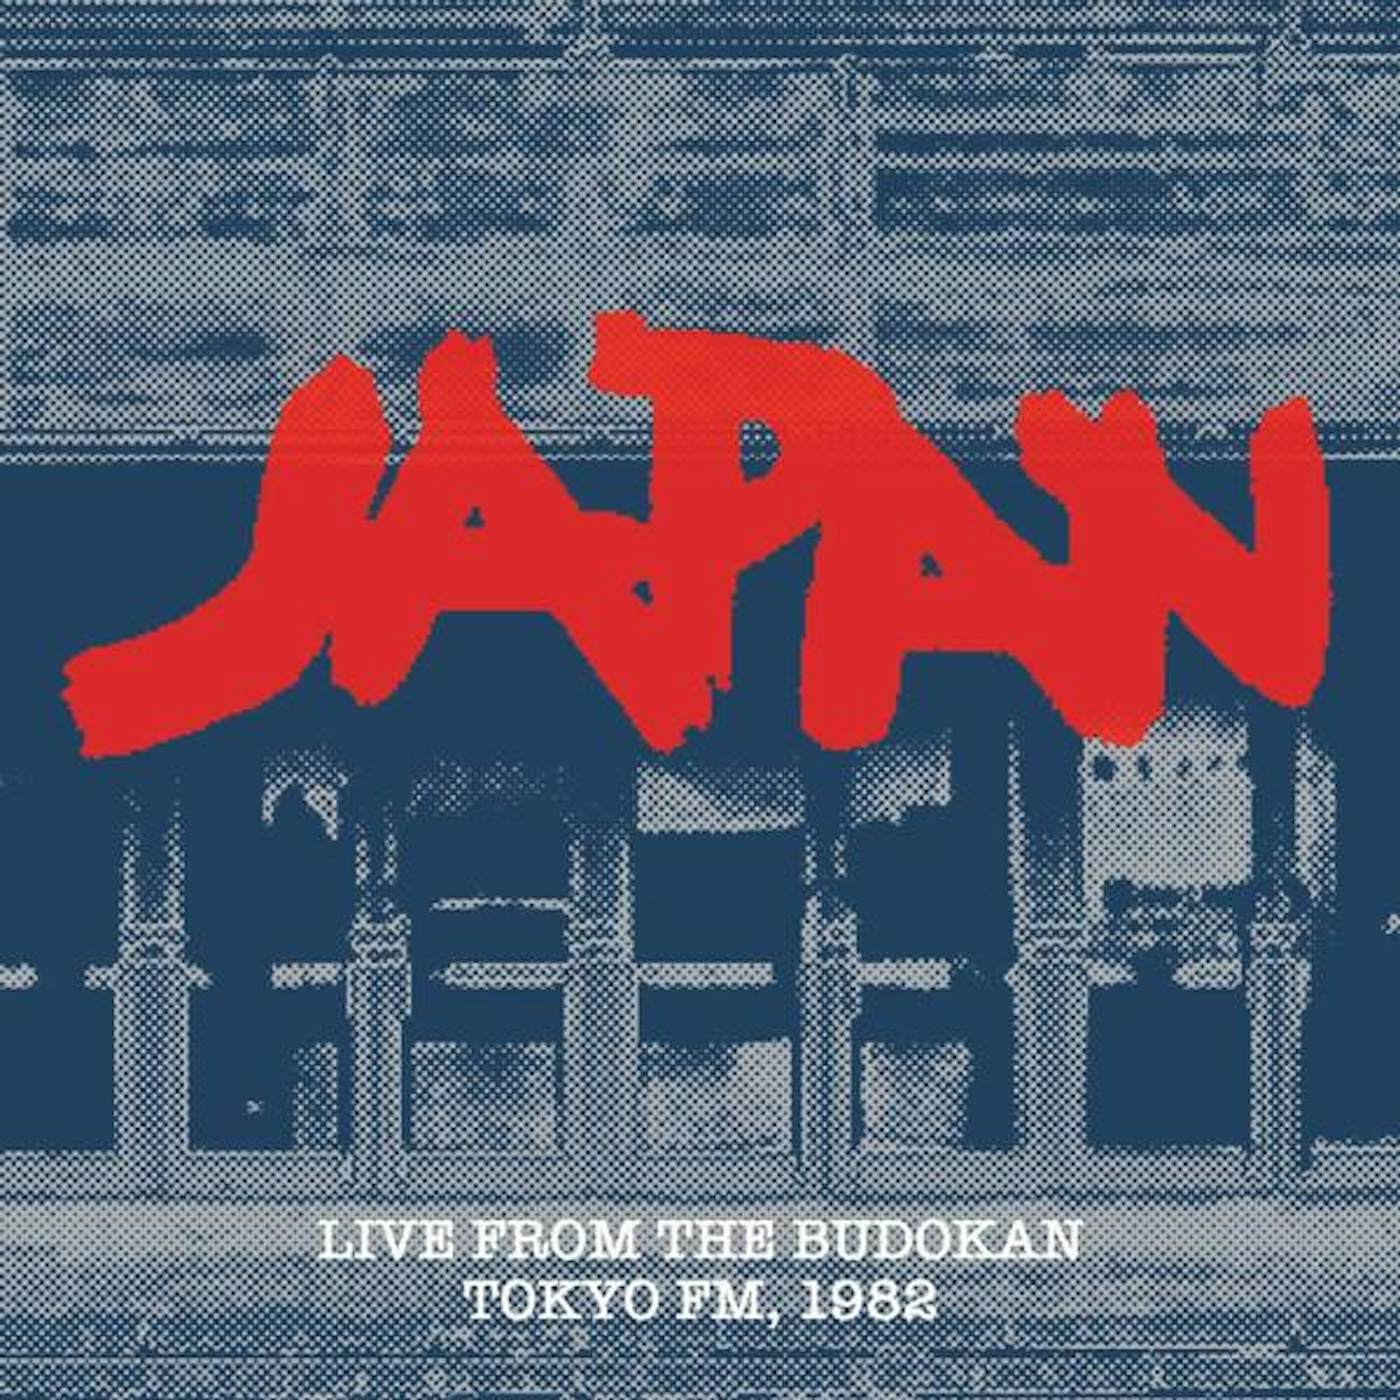 Japan FROM THE BUDOKAN TOKYO FM, 1982 CD